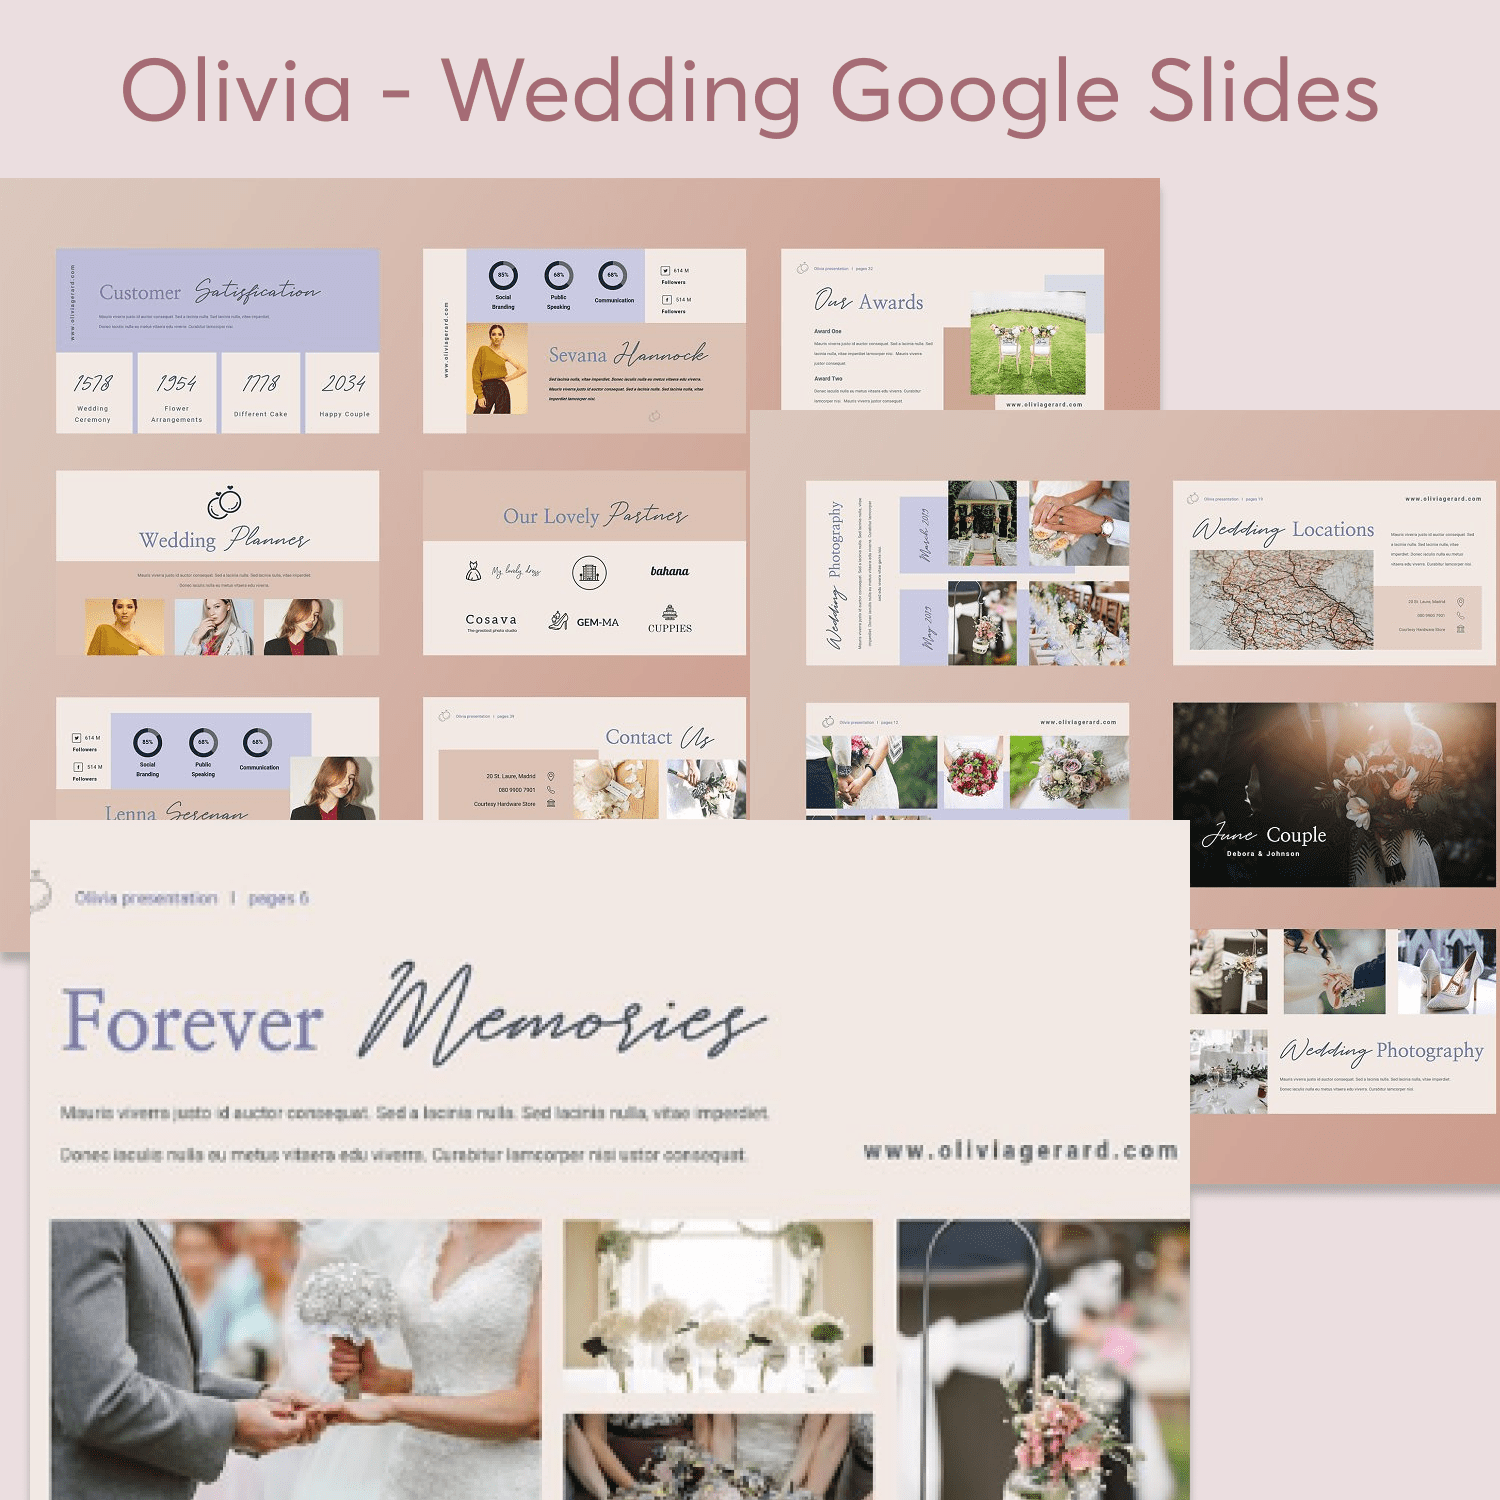 Olivia - Wedding Google Slides cover.